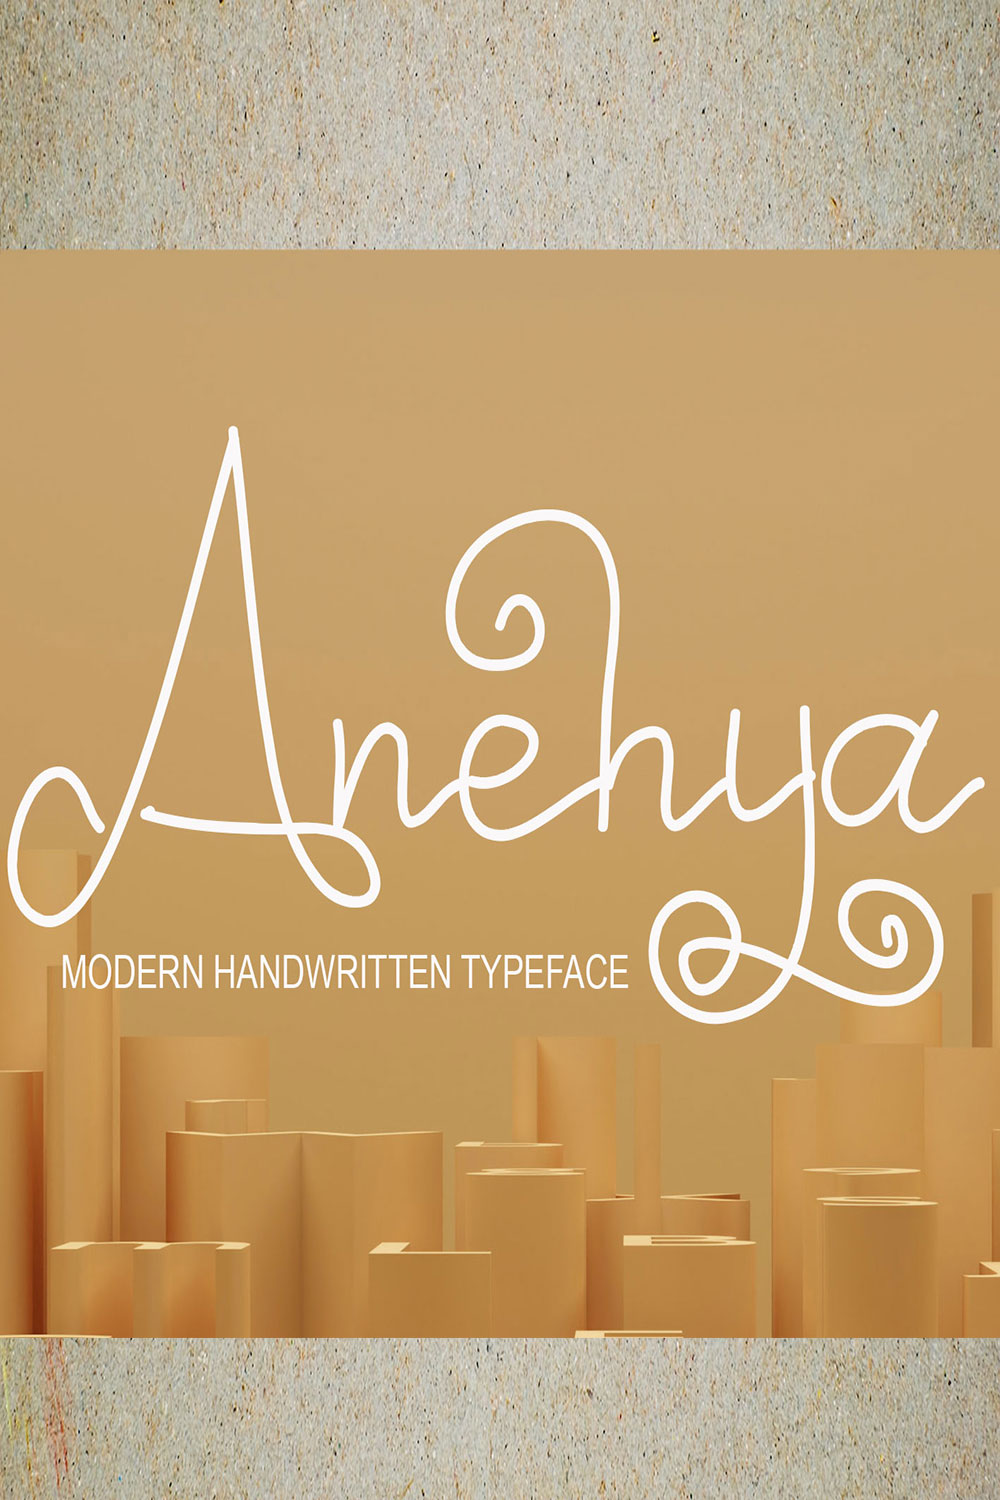 Anehya Script Signature Font Pinterest image.